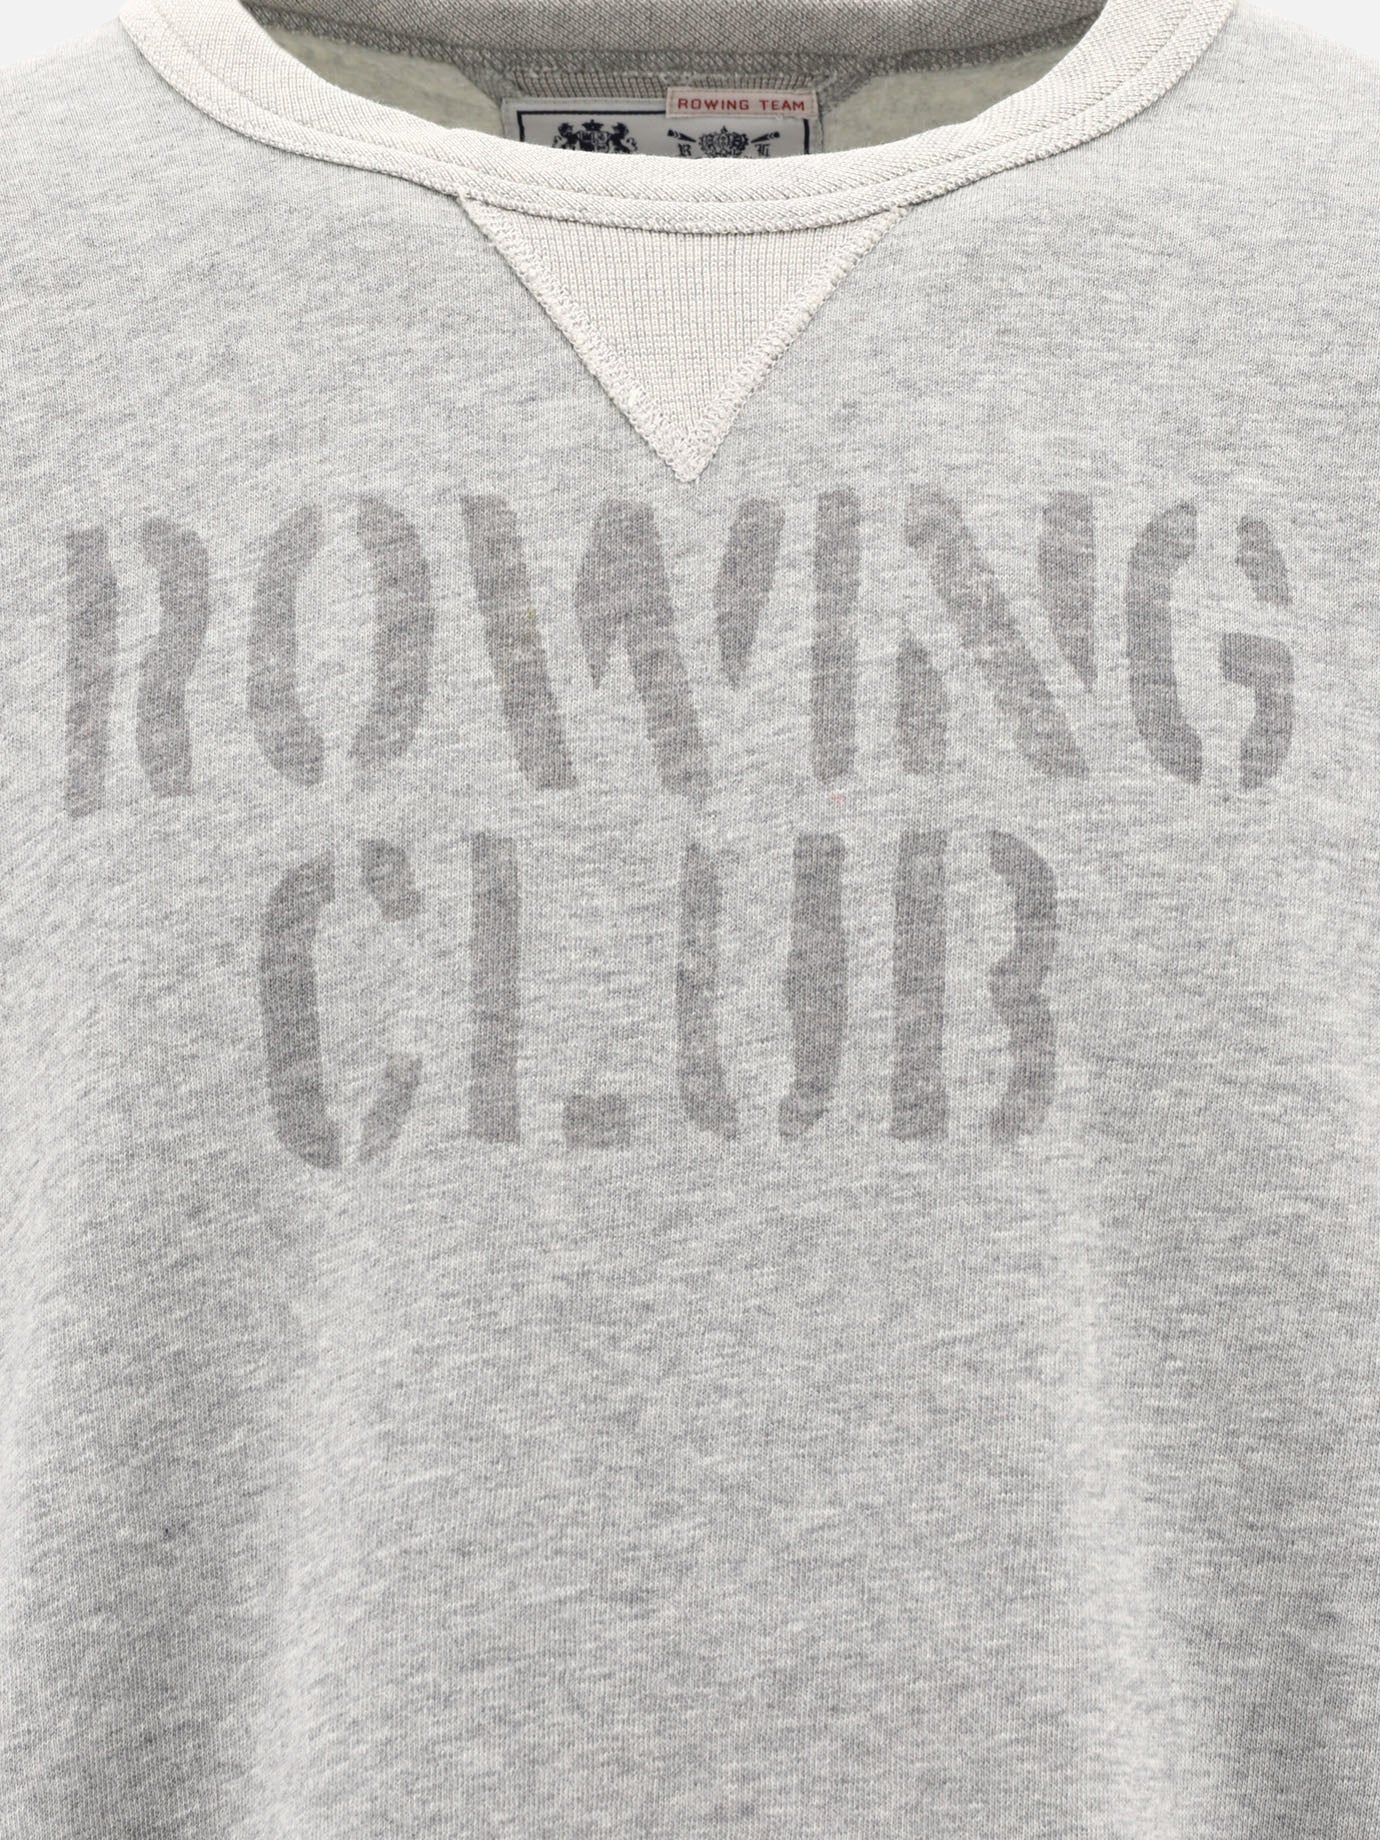 Felpa "Rowing Club"